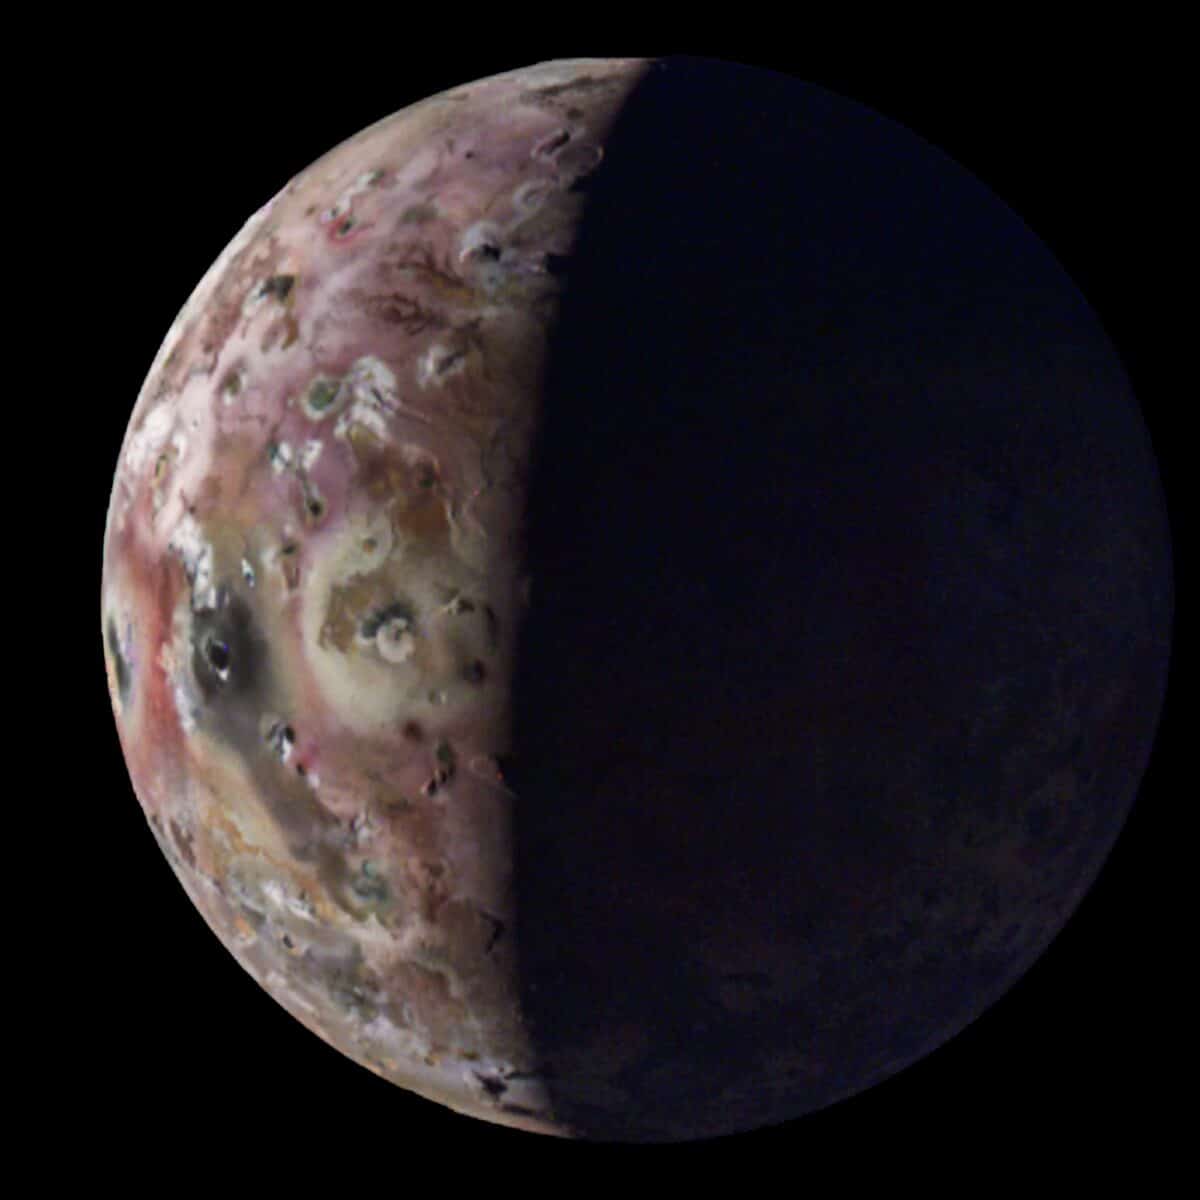 Ио / © NASA / JPL-Caltech / SwRI / MSSS. Image processing: Gerald Eichstädt / Thomas Thomopoulos (CC BY).